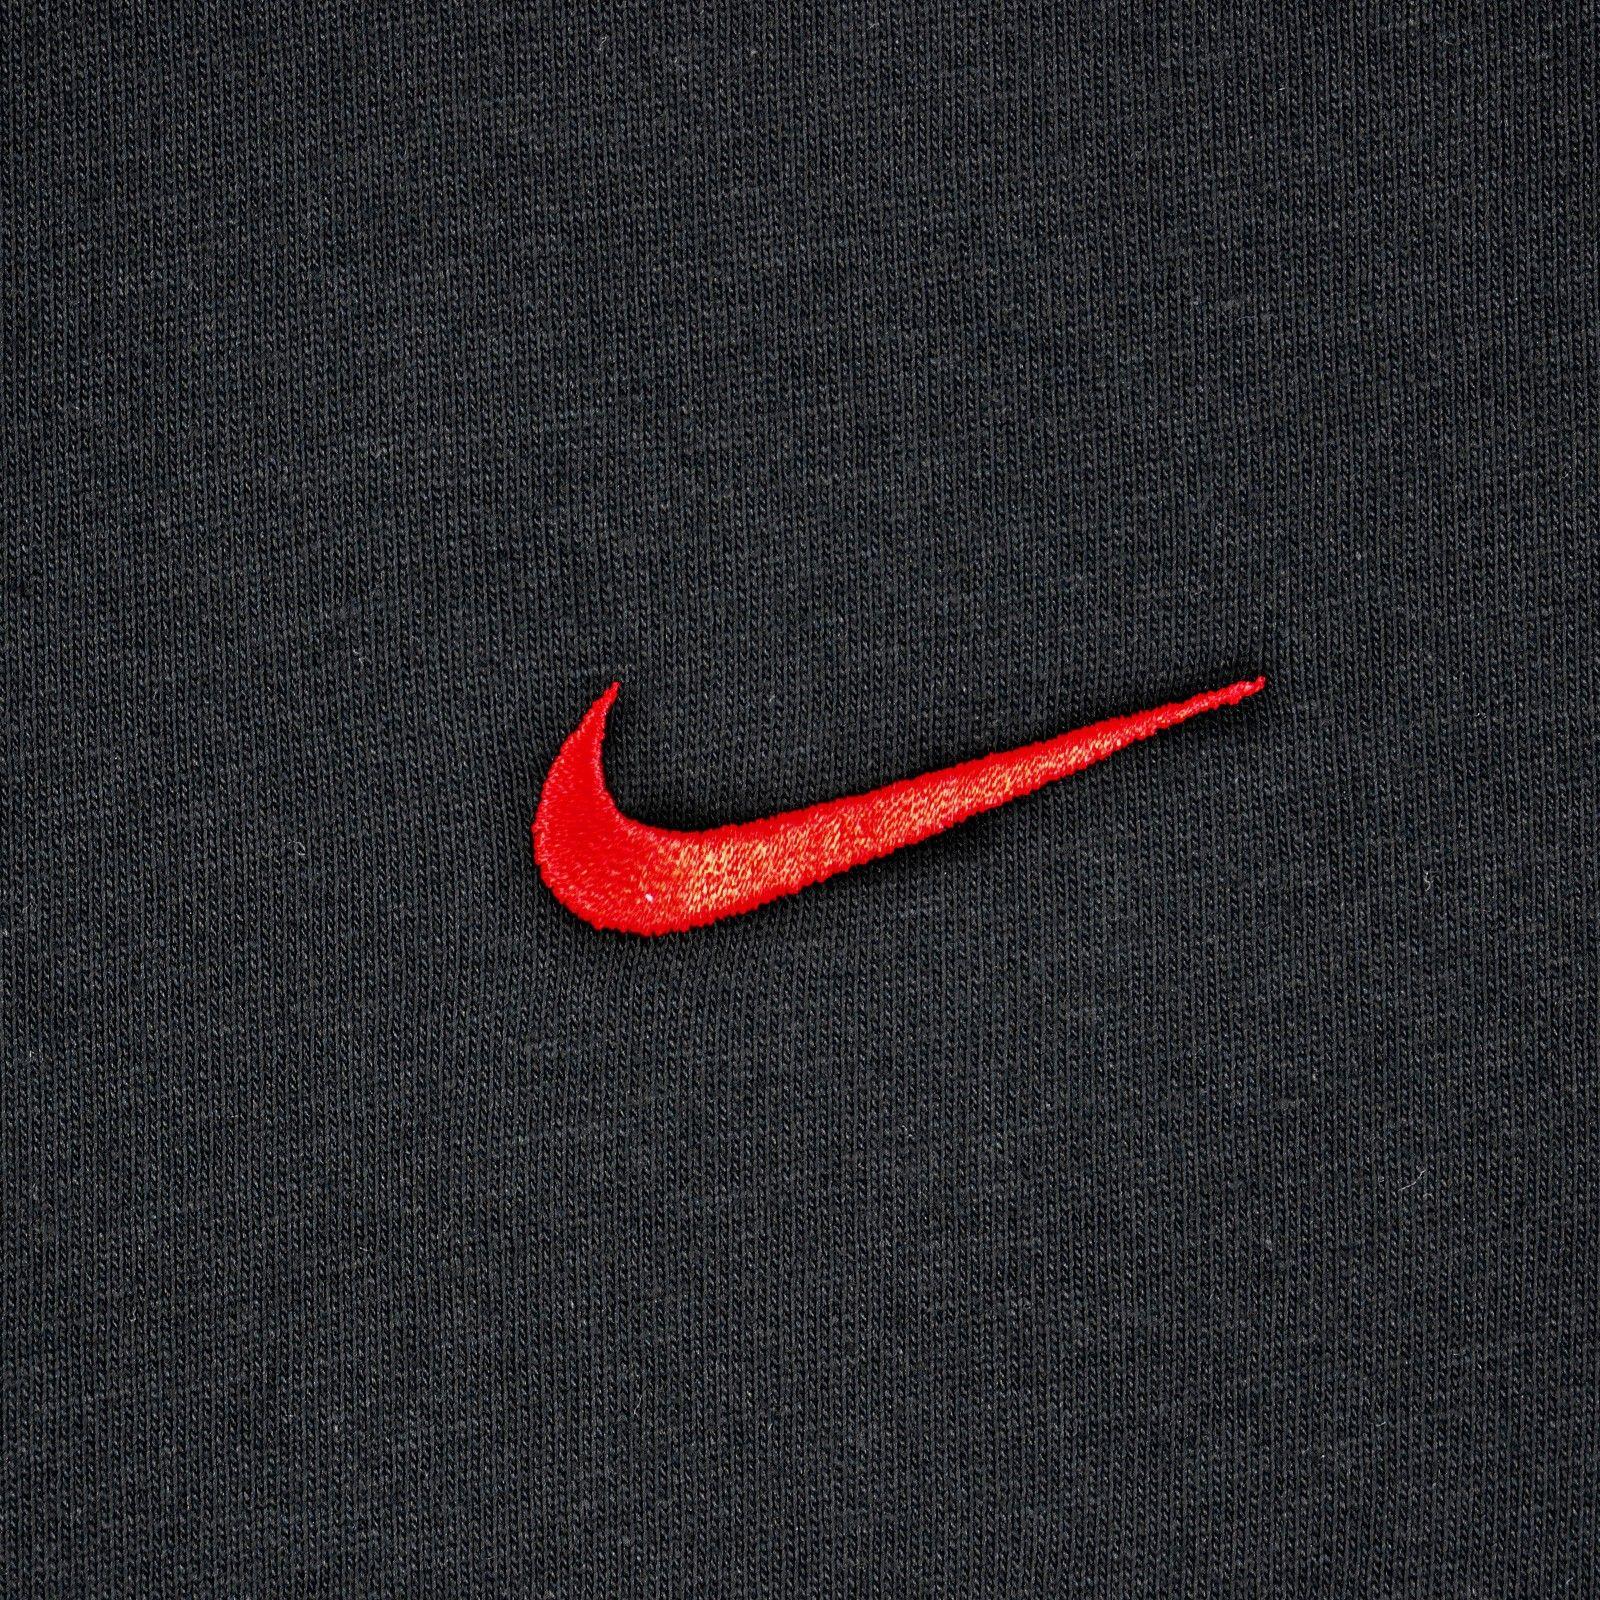 Red and Black Nike Logo - Nike Basic Swoosh Tee Men's Casual Sports Cotton T-Shirt Tennis ...